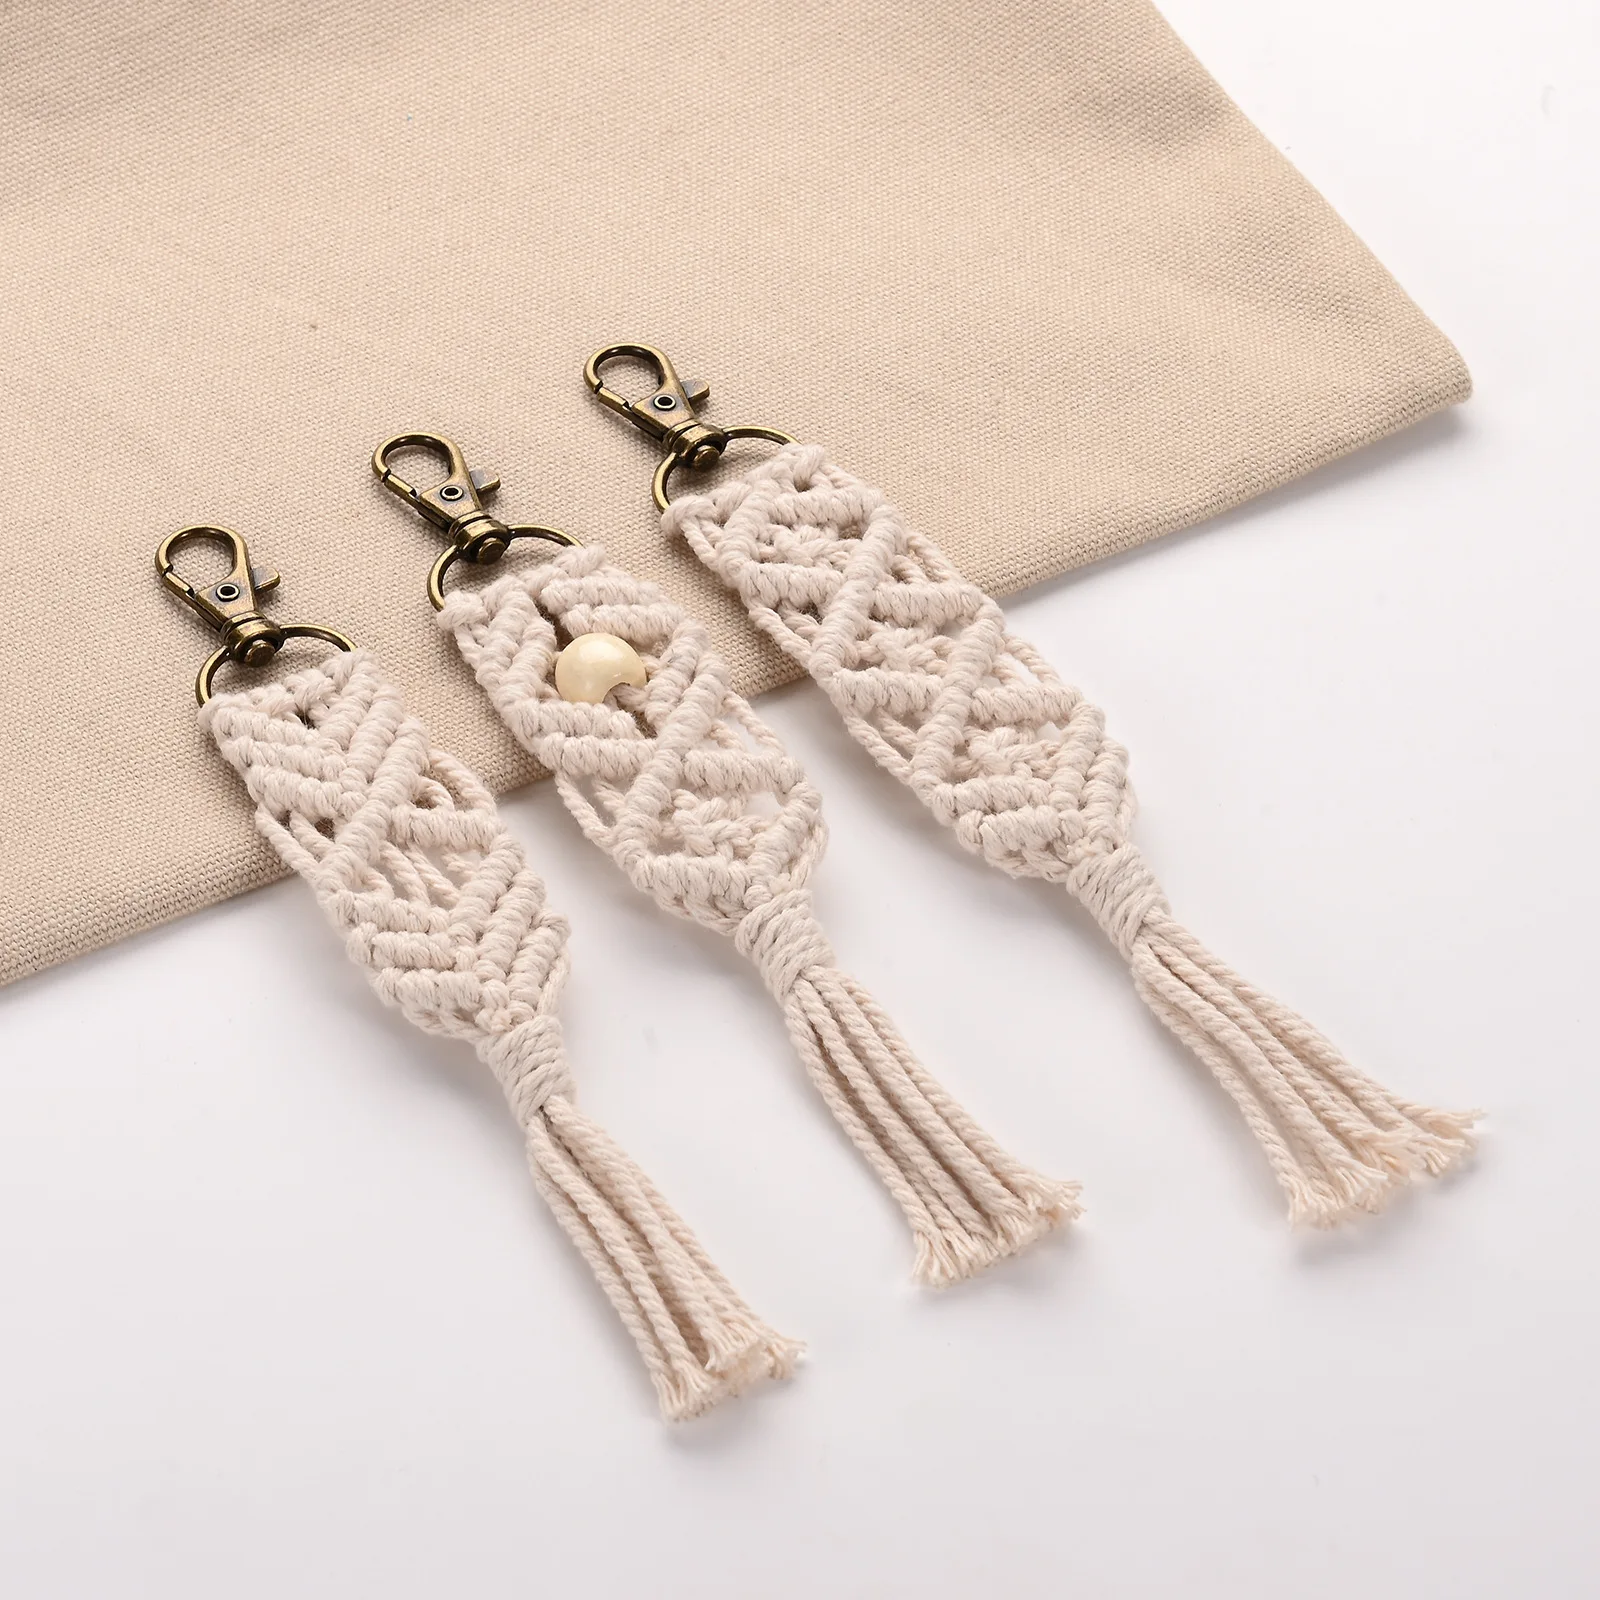 

2022 Handmade Weave DIY Cotton Rope Keychain Charm Boho Accessories Handcrafted Bracelet Lanyard Macrame Wristlet Keychain Gift